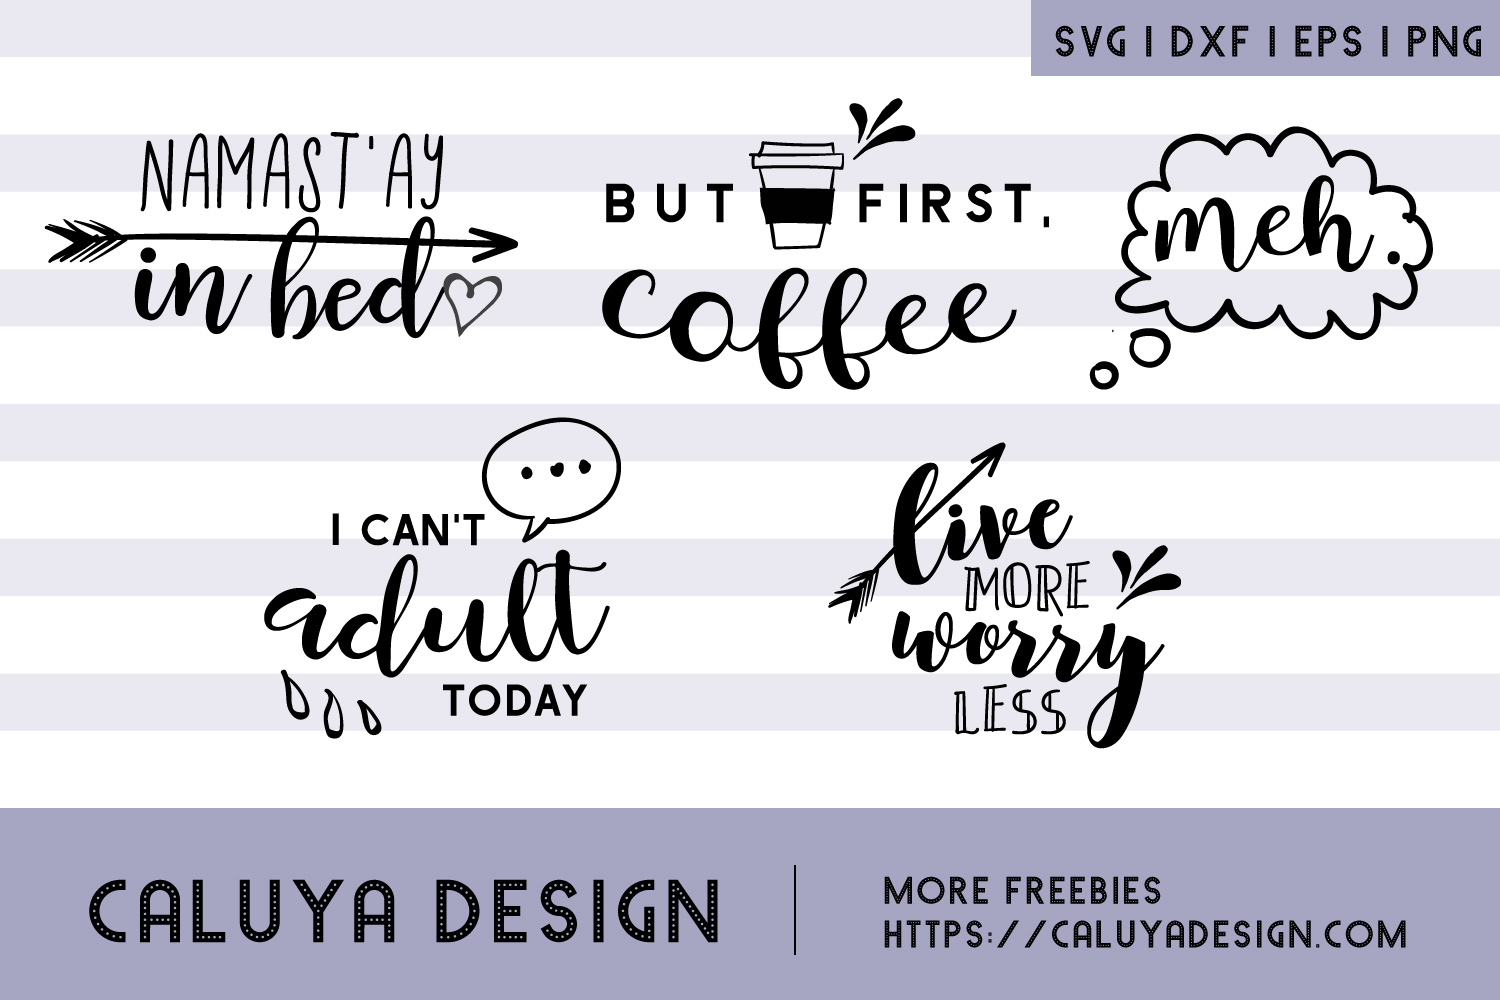 Download Free SVG download | Free Design Resources